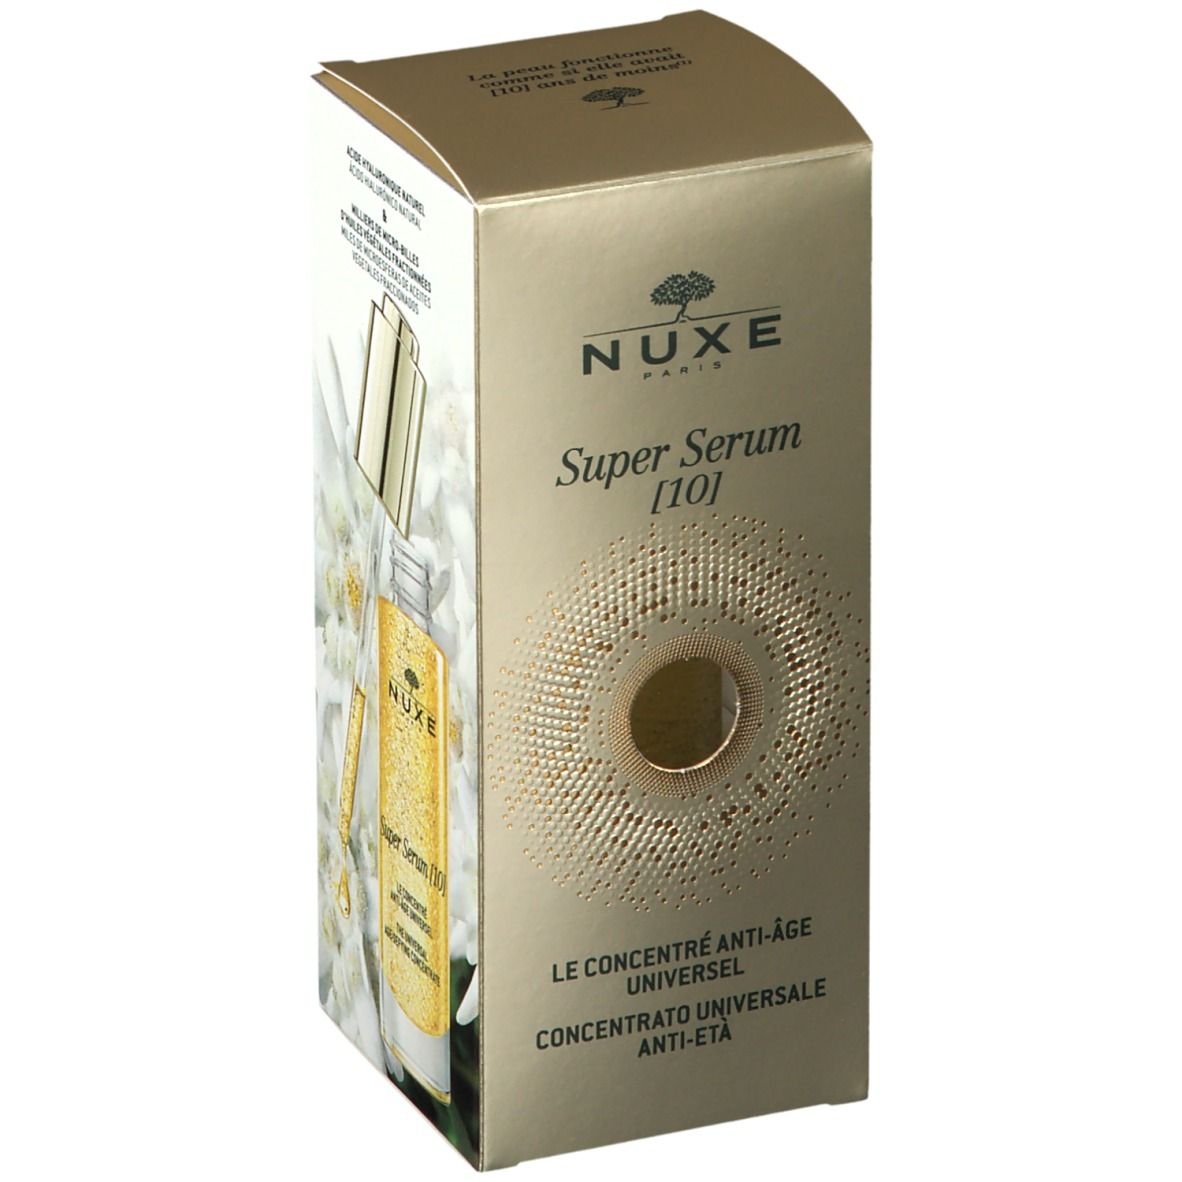 Image of NUXE Super Serum [10] Das universelle Anti-Aging-Konzentrat